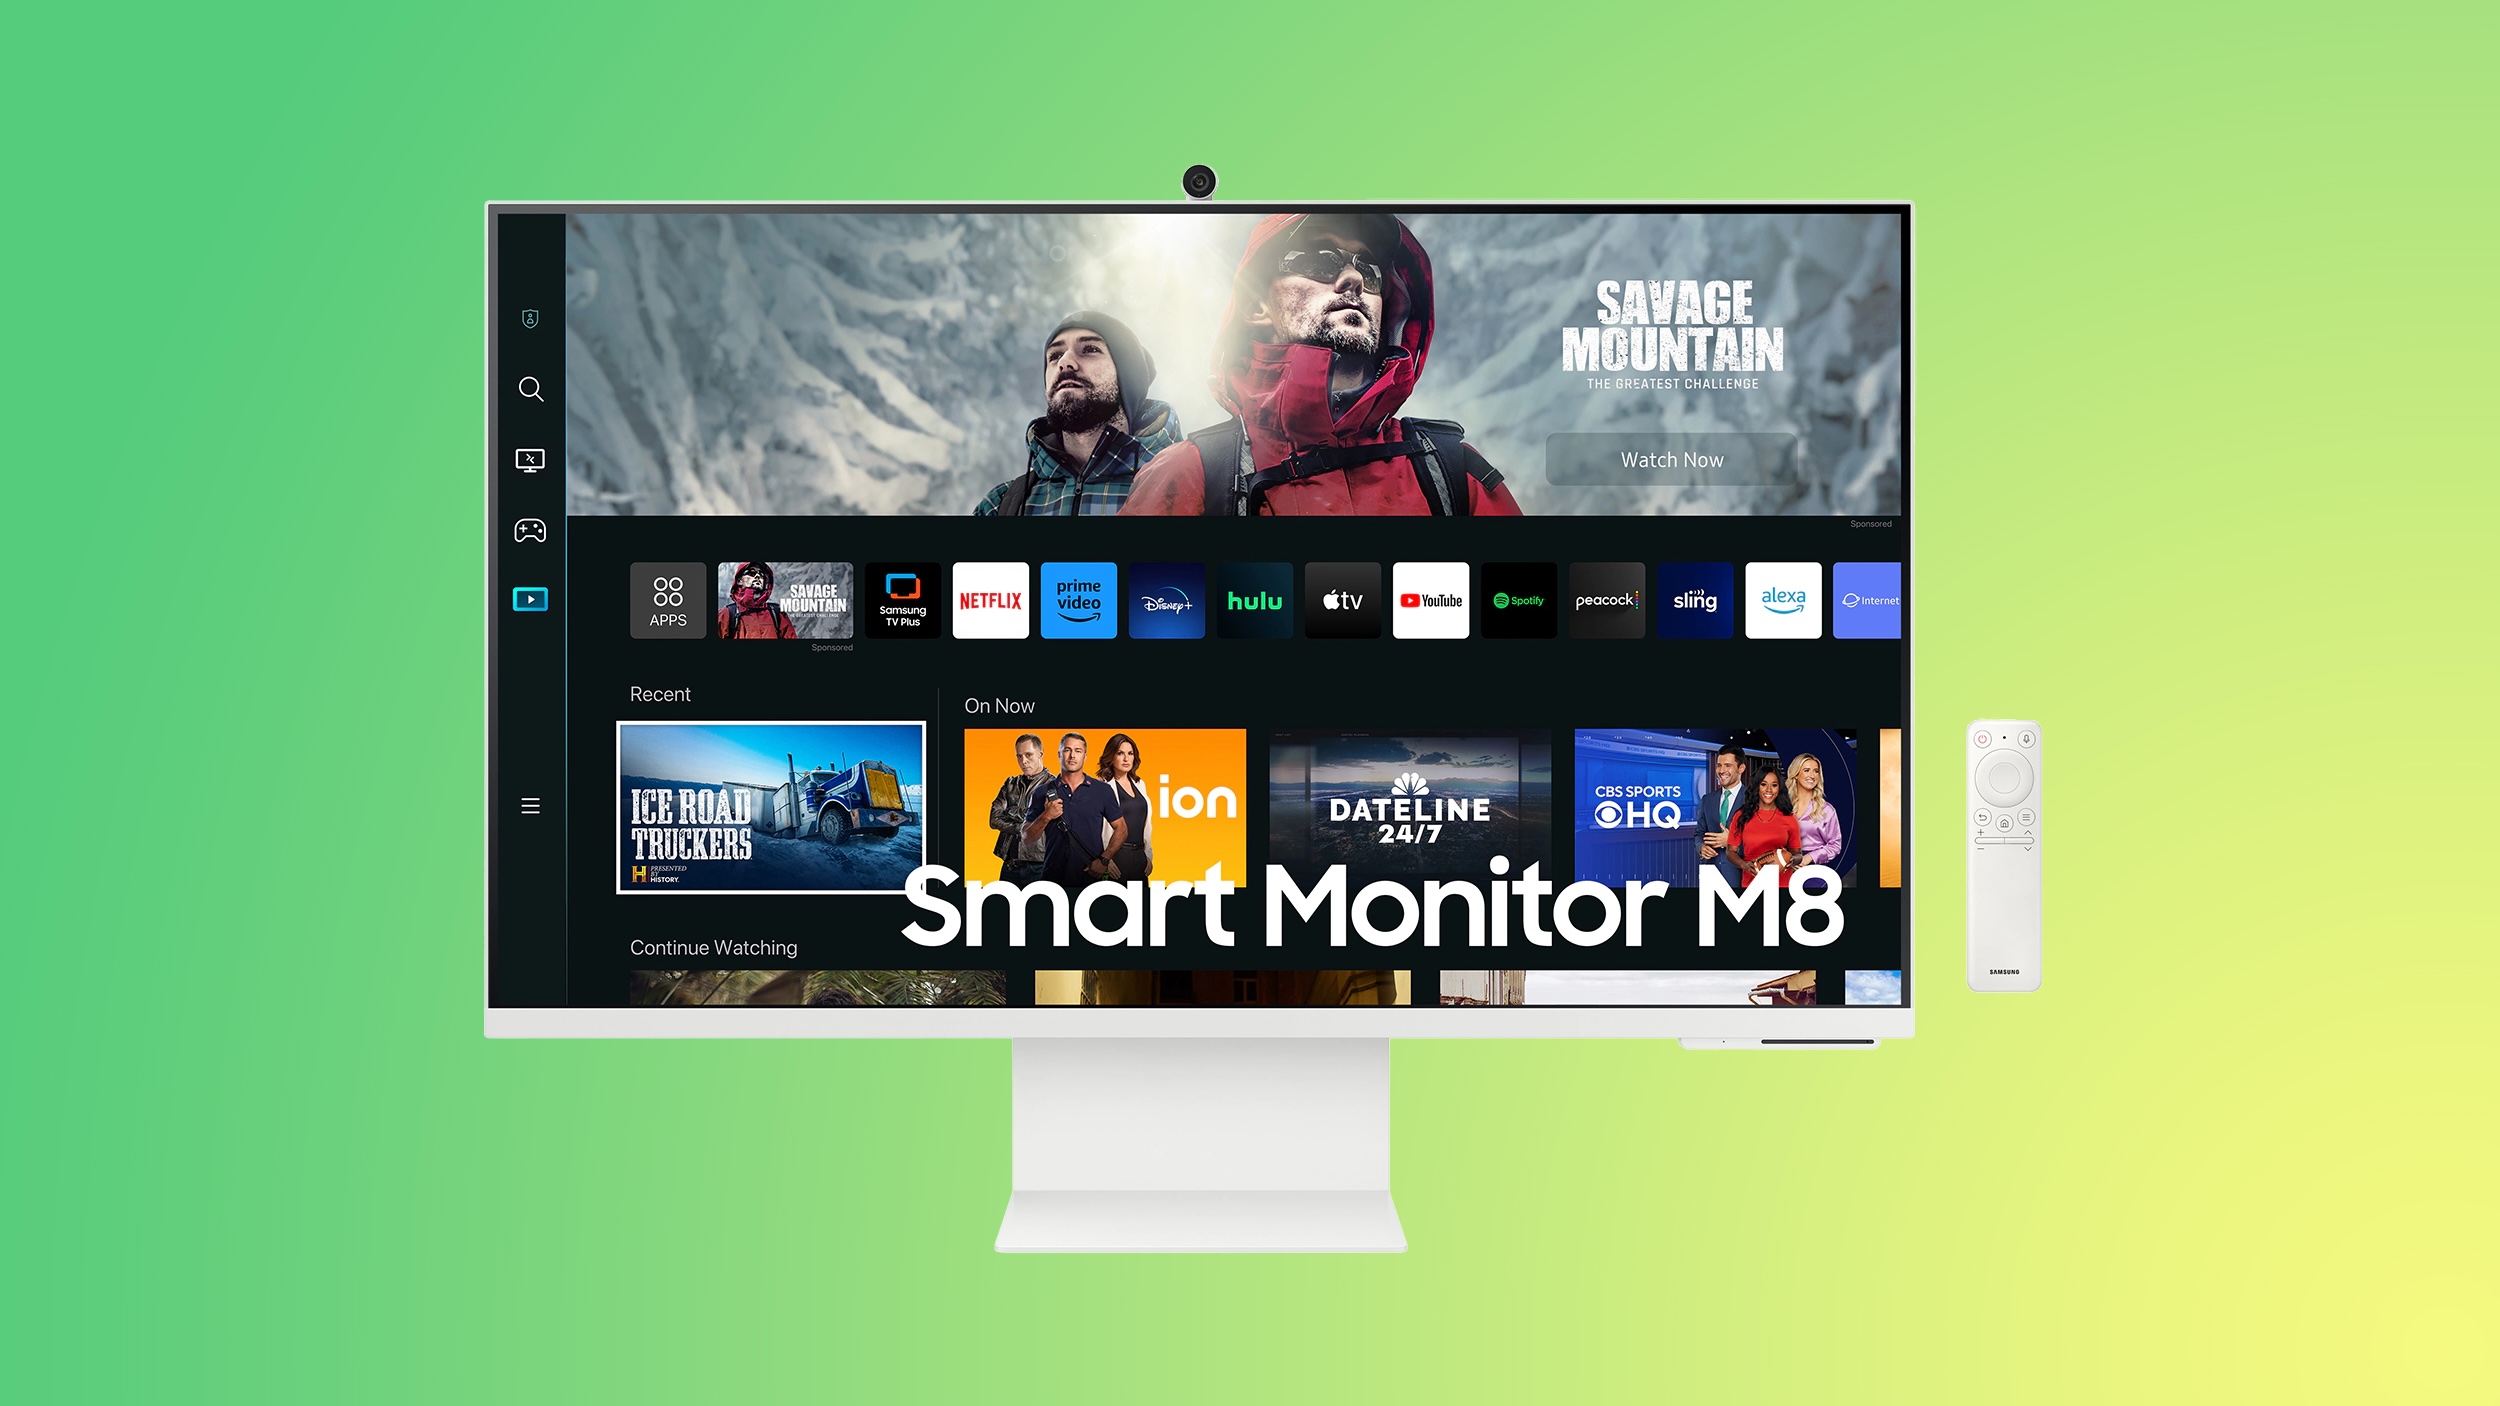 smart monitor m8 samsung green